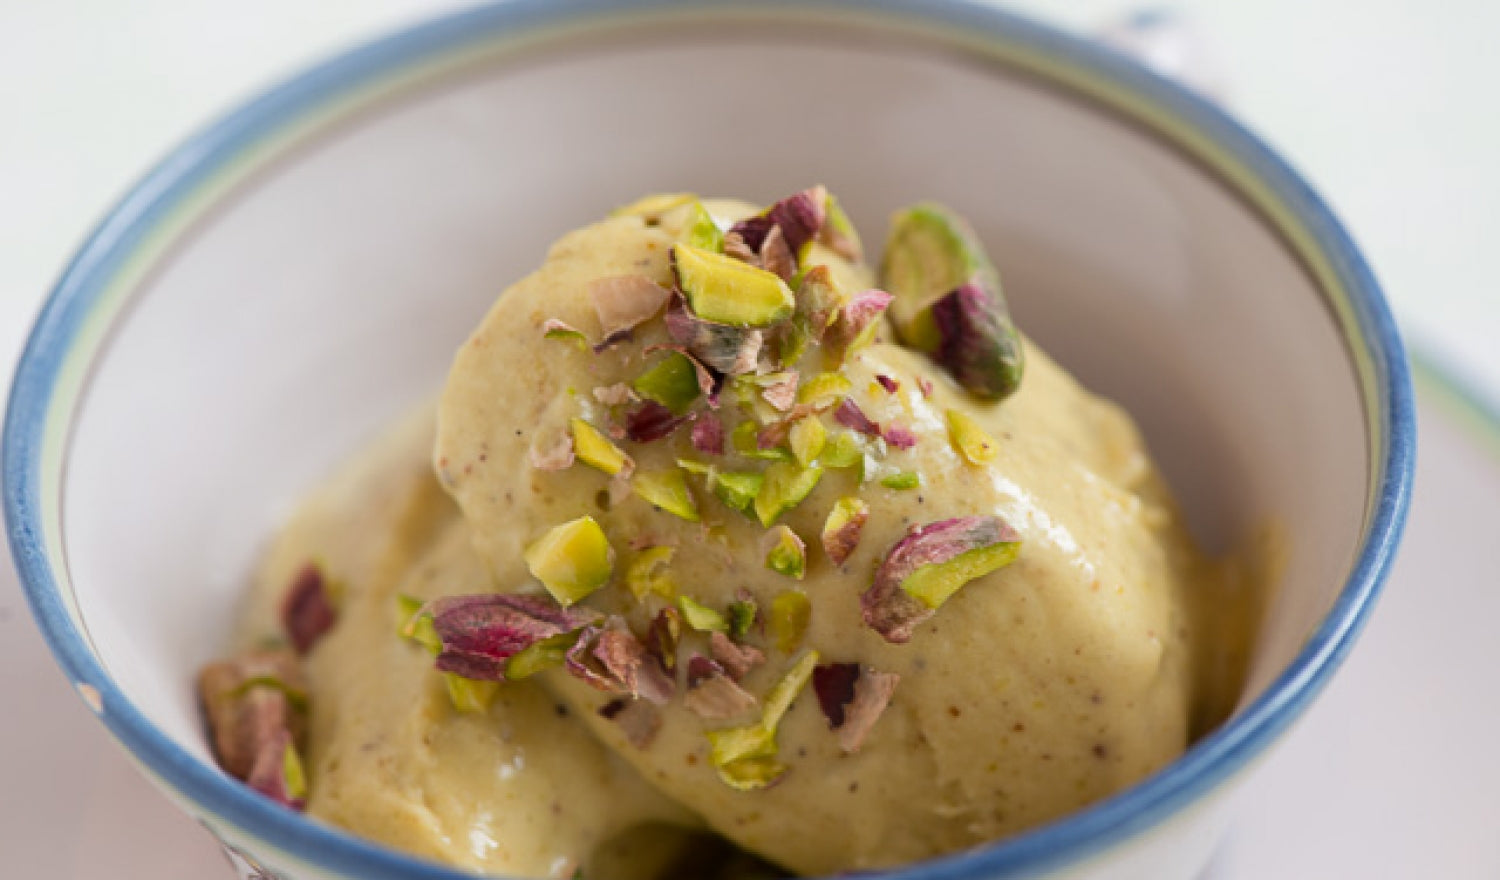 Pistachio ice cream gelato recipe, with chopped pistachios using ice cream stabiliser to make it ultra smooth